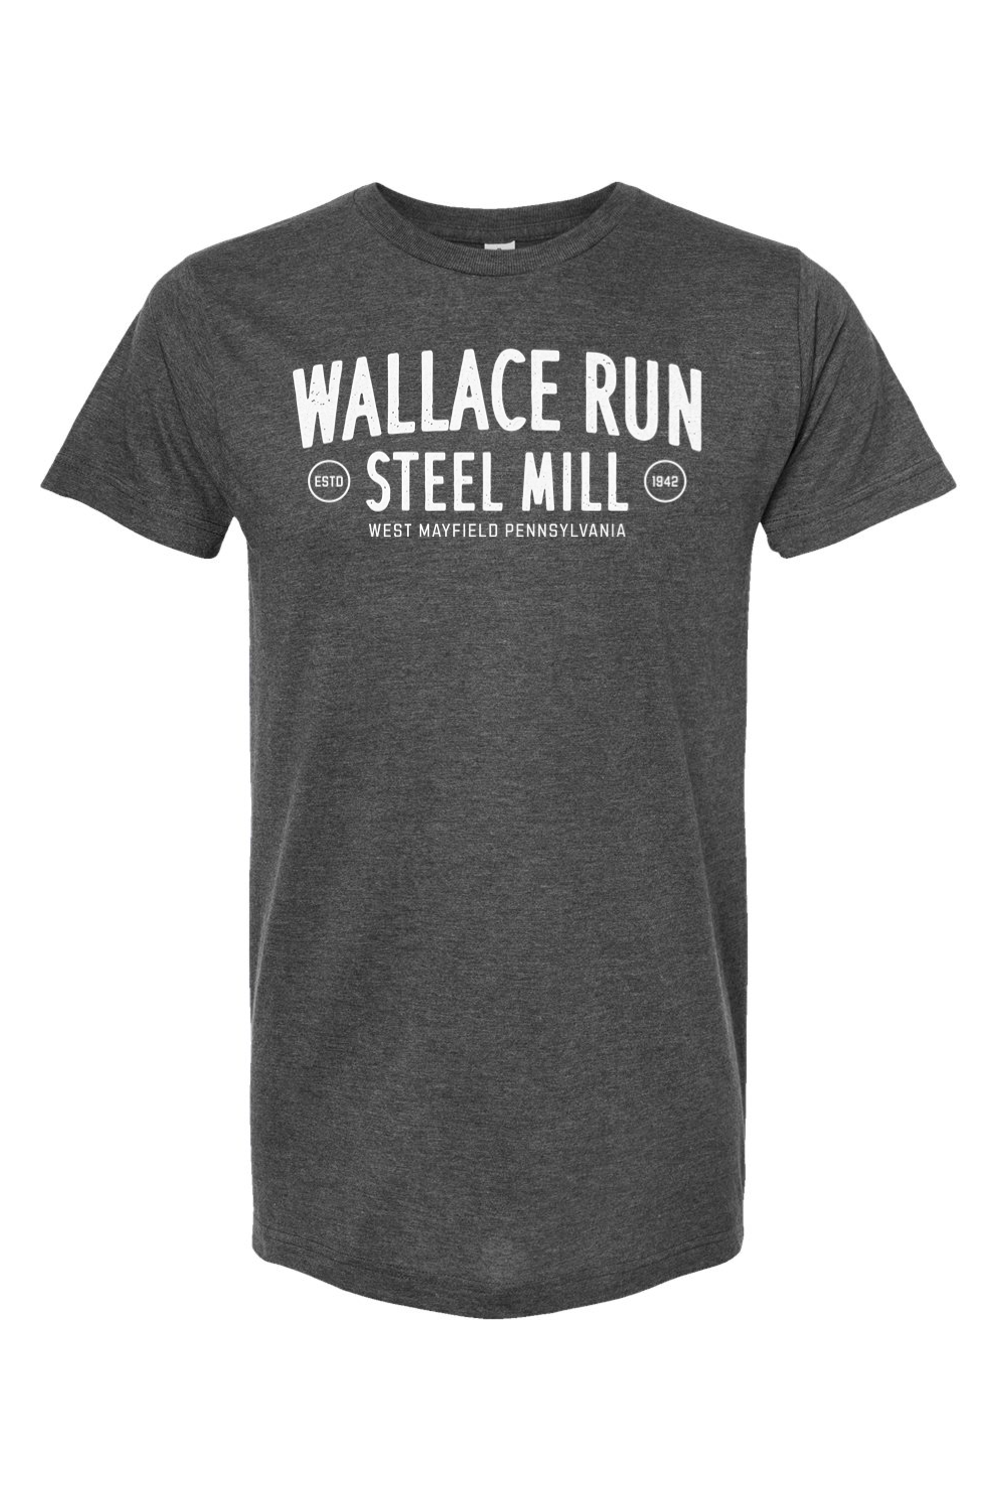 Wallace Run Steel Mill - West Mayfield - Beaver County - Yinzylvania